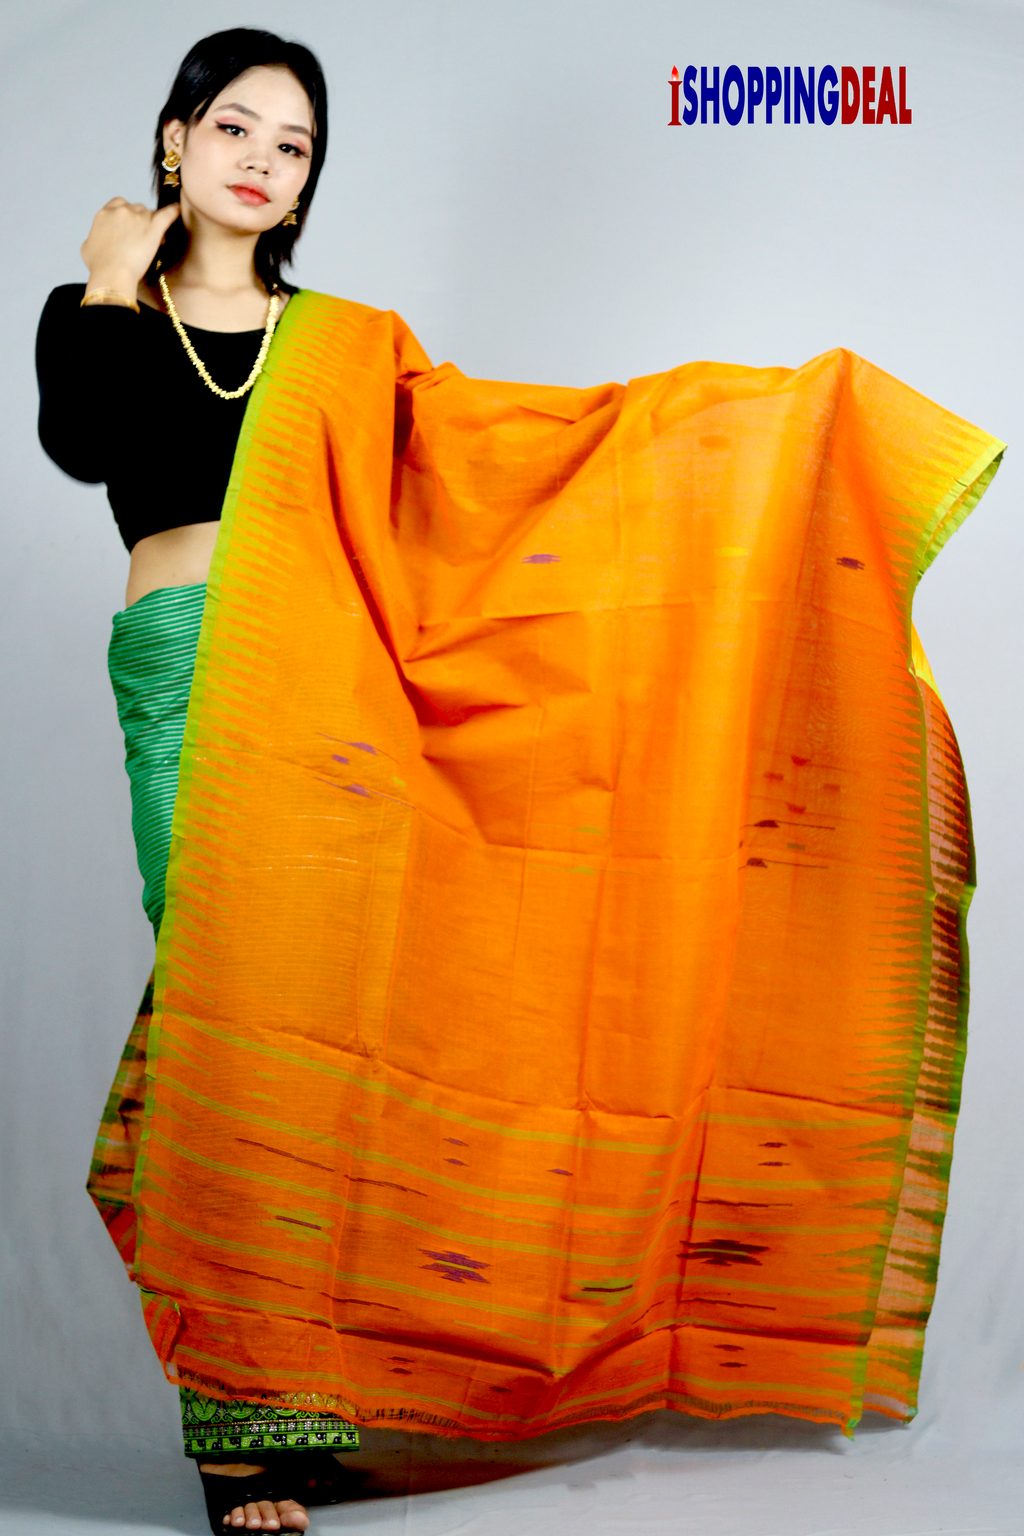 manipuri dress